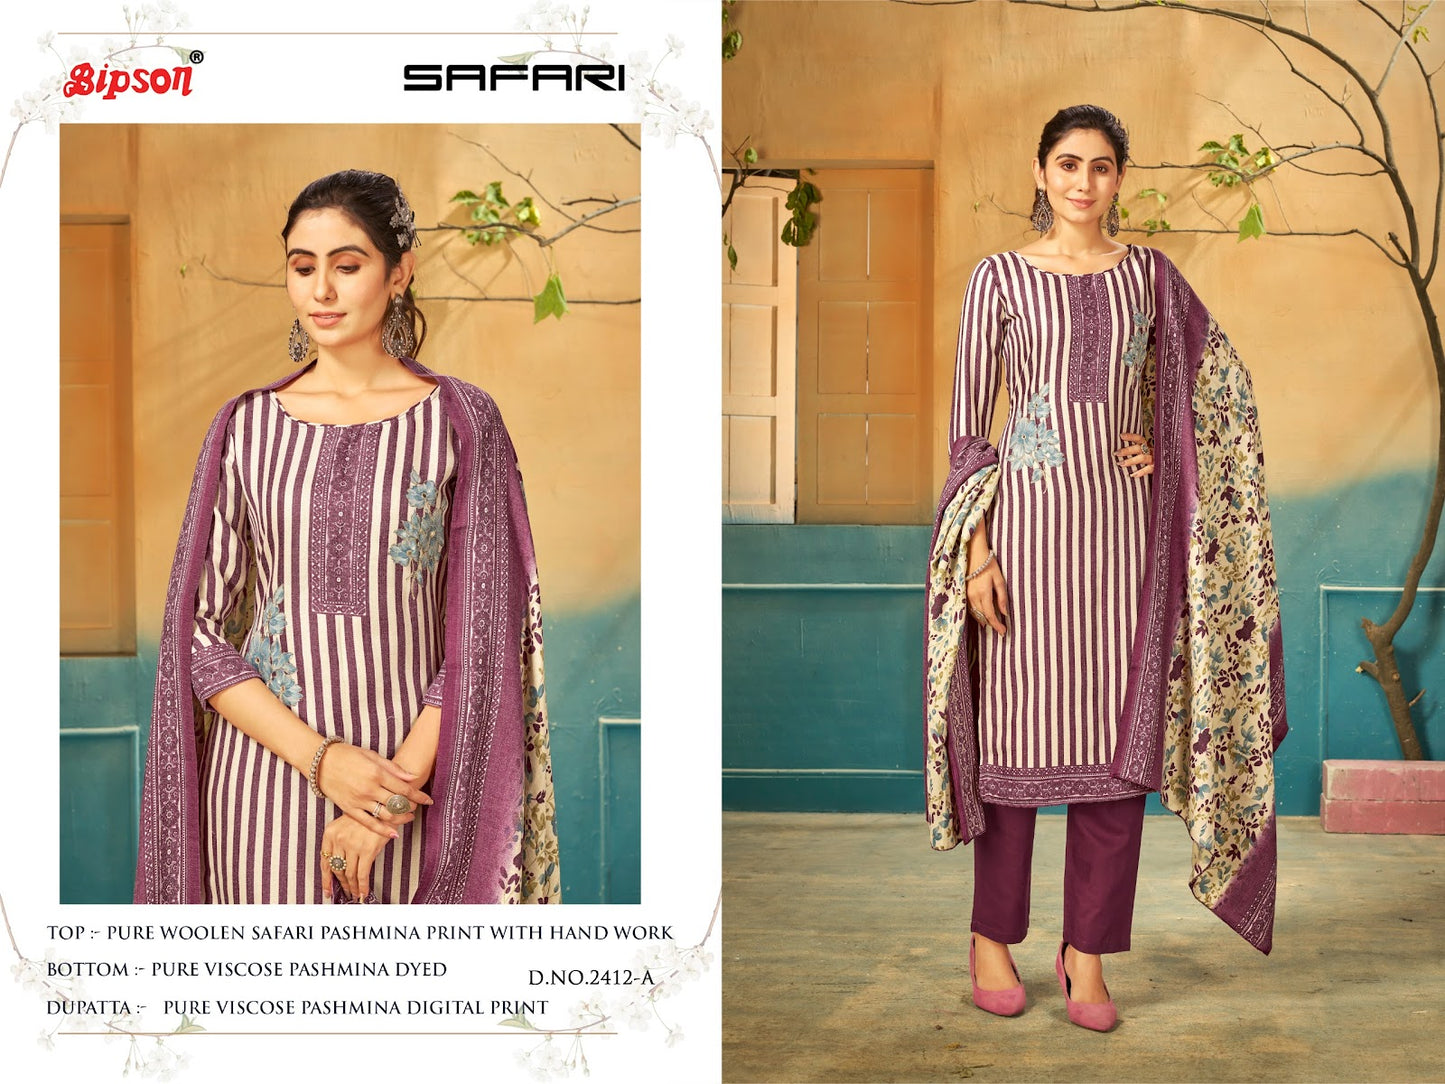 Safari-2412 Bipson Prints Wool Pashmina Suits